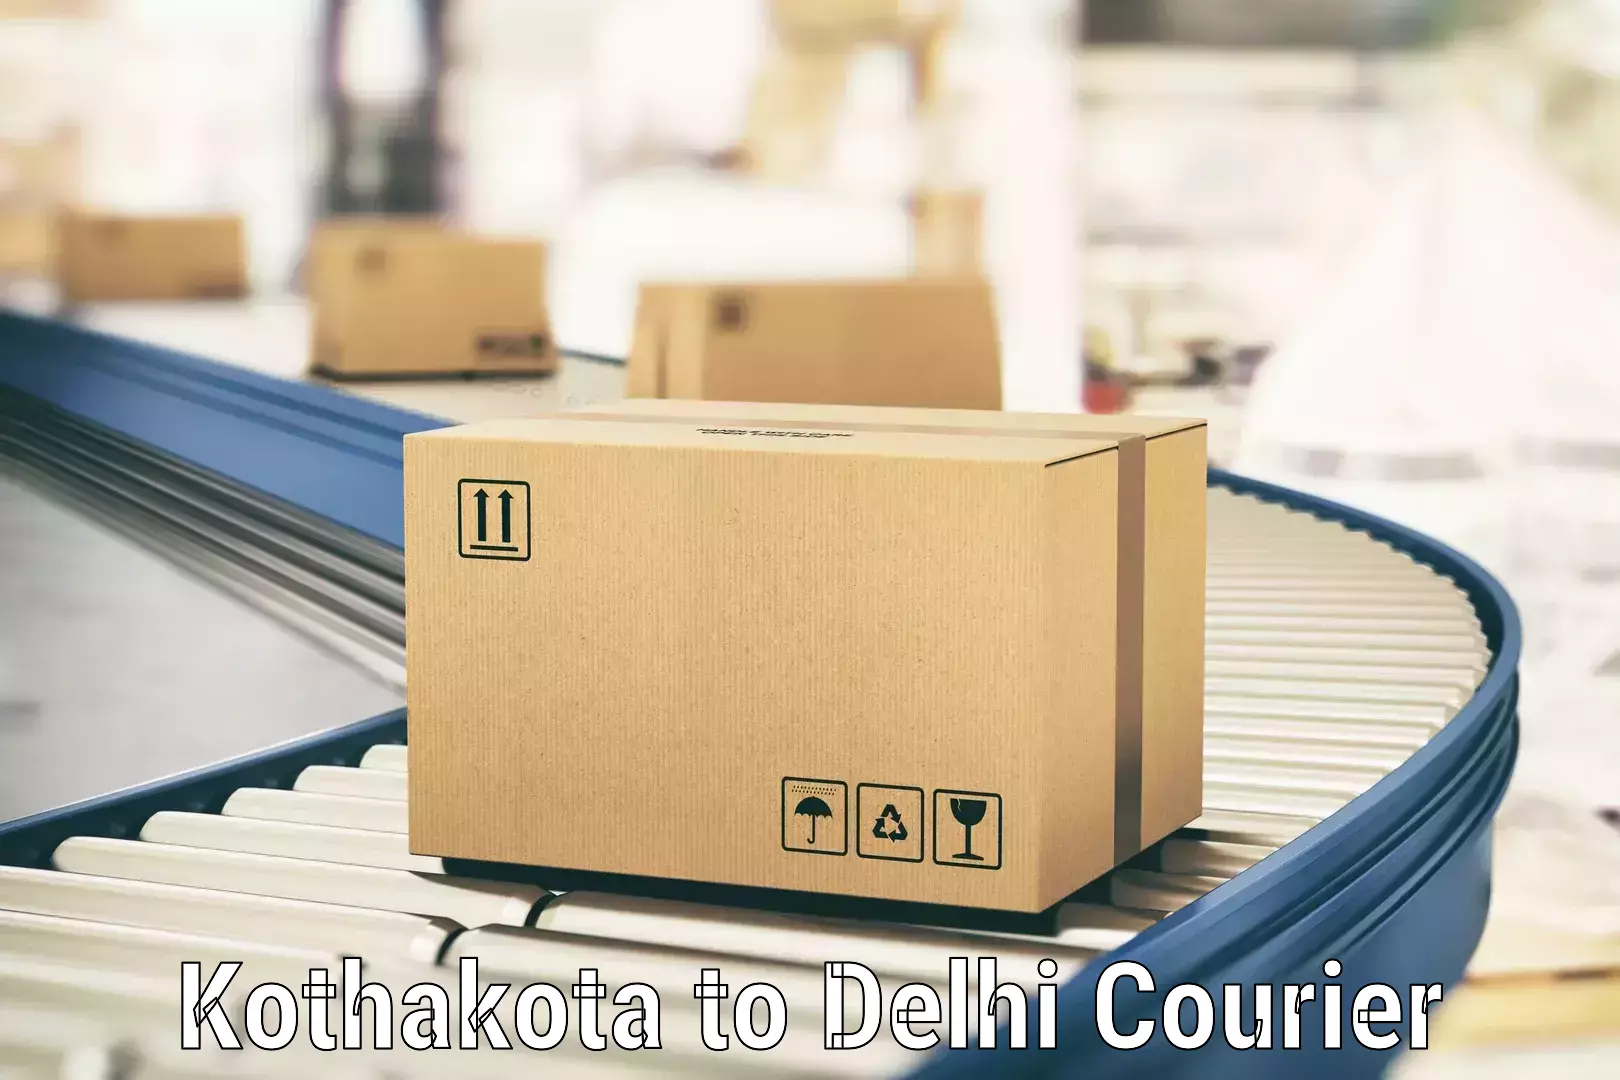 Sustainable shipping practices Kothakota to Lodhi Road